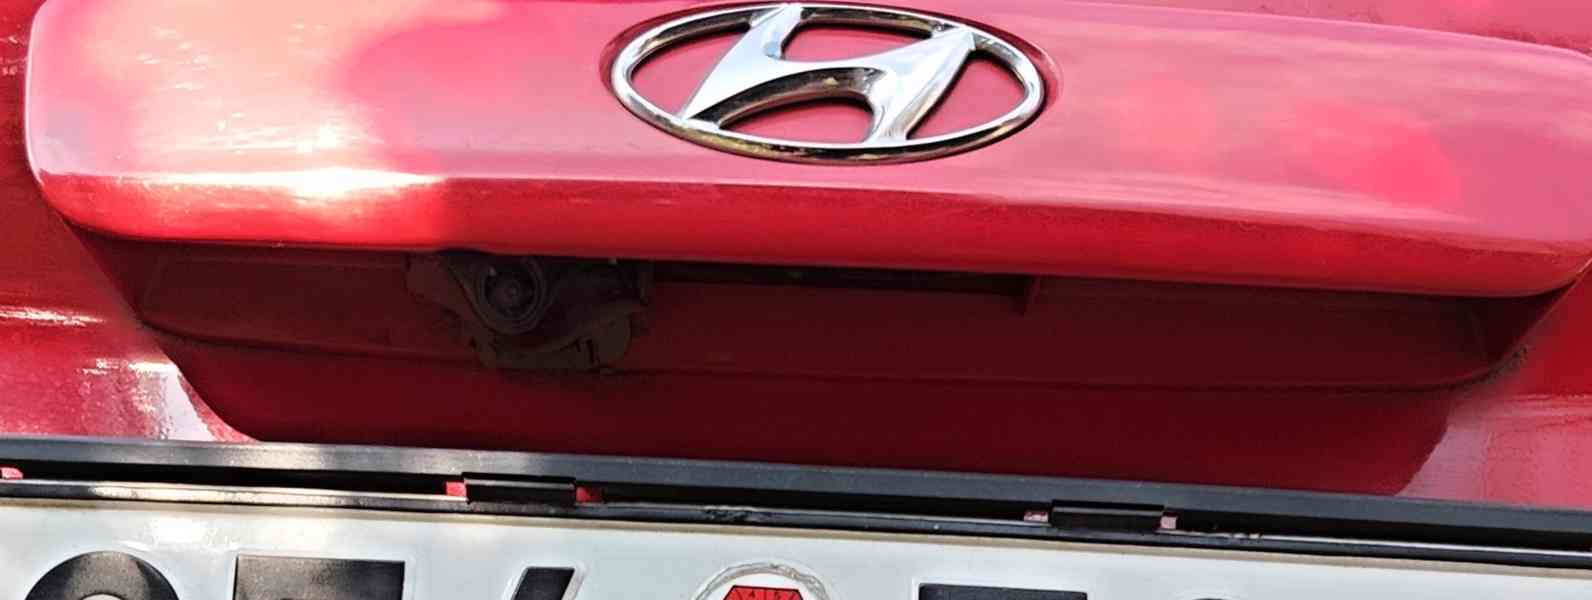 Hyundai Getz 1.4 16V - foto 4